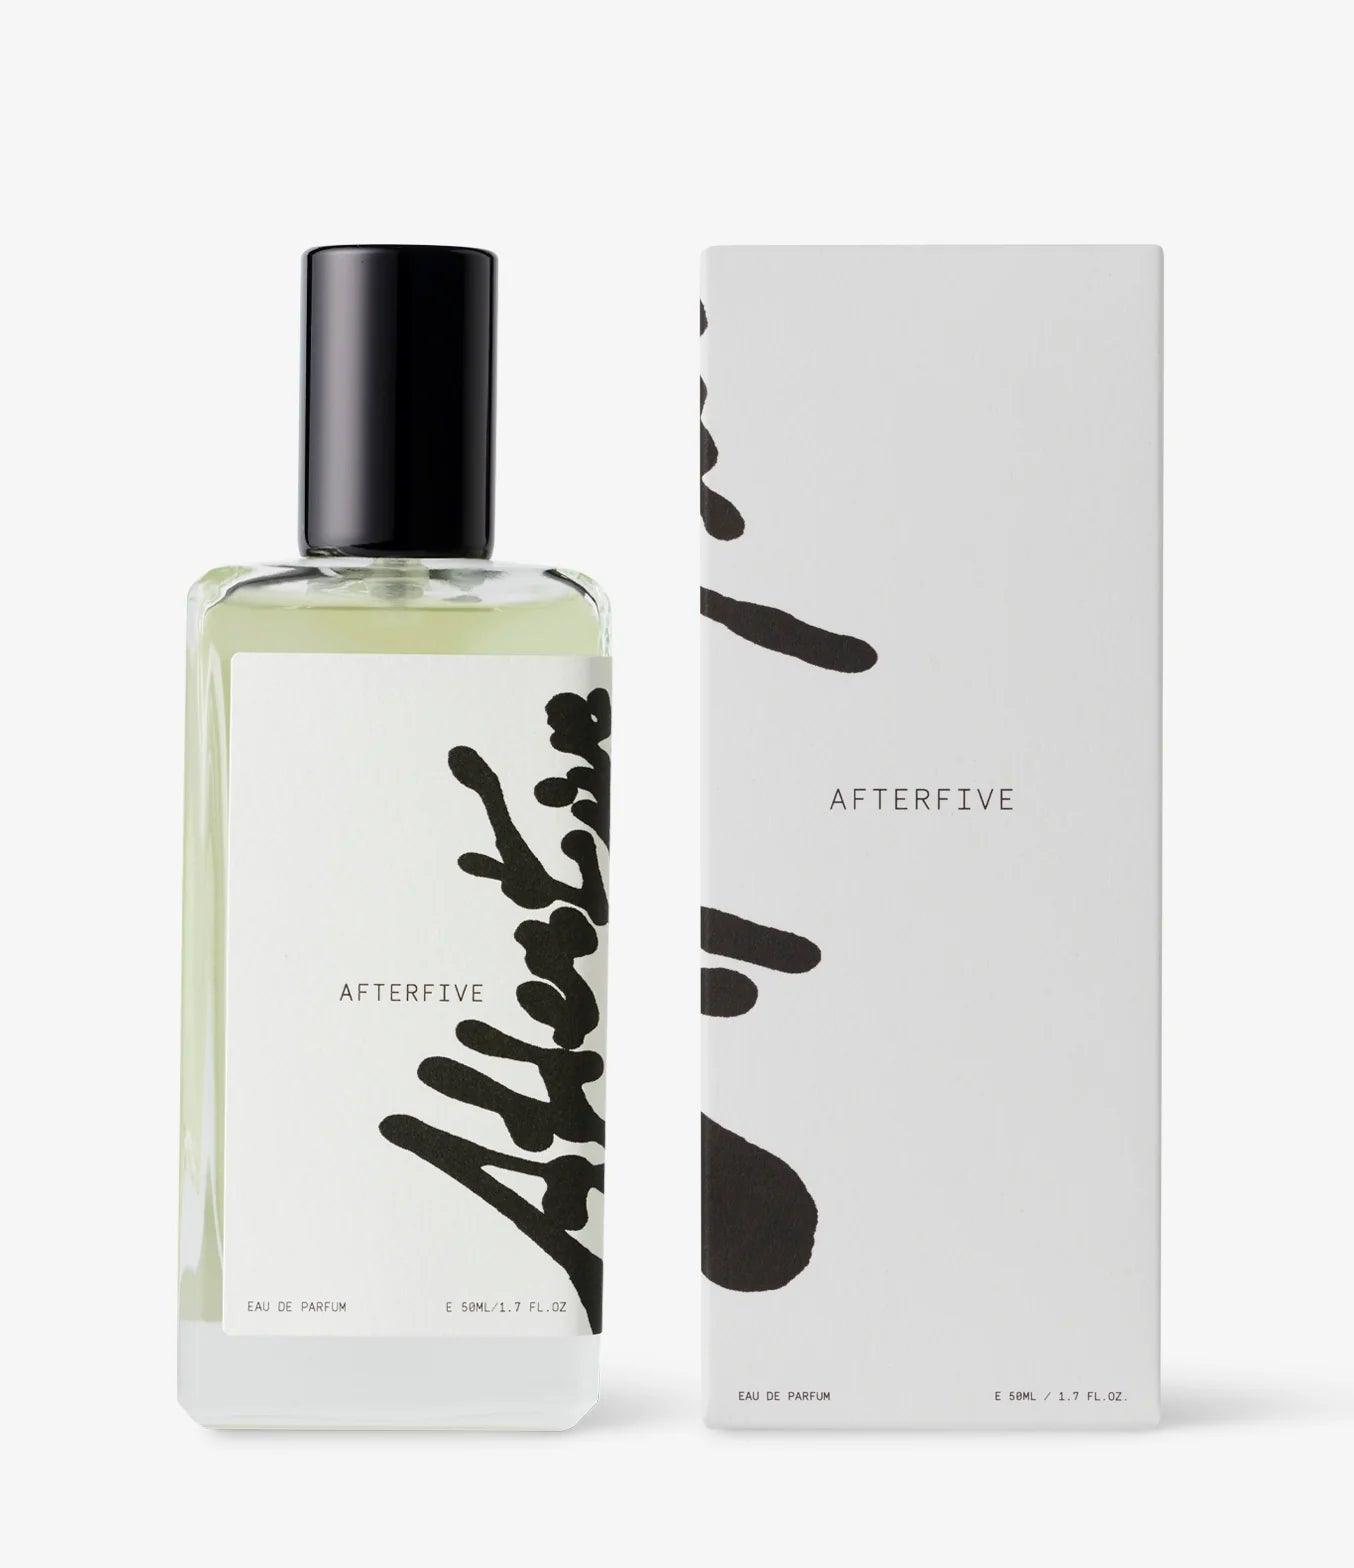 Afterfive Perfume 50ml - ECRU